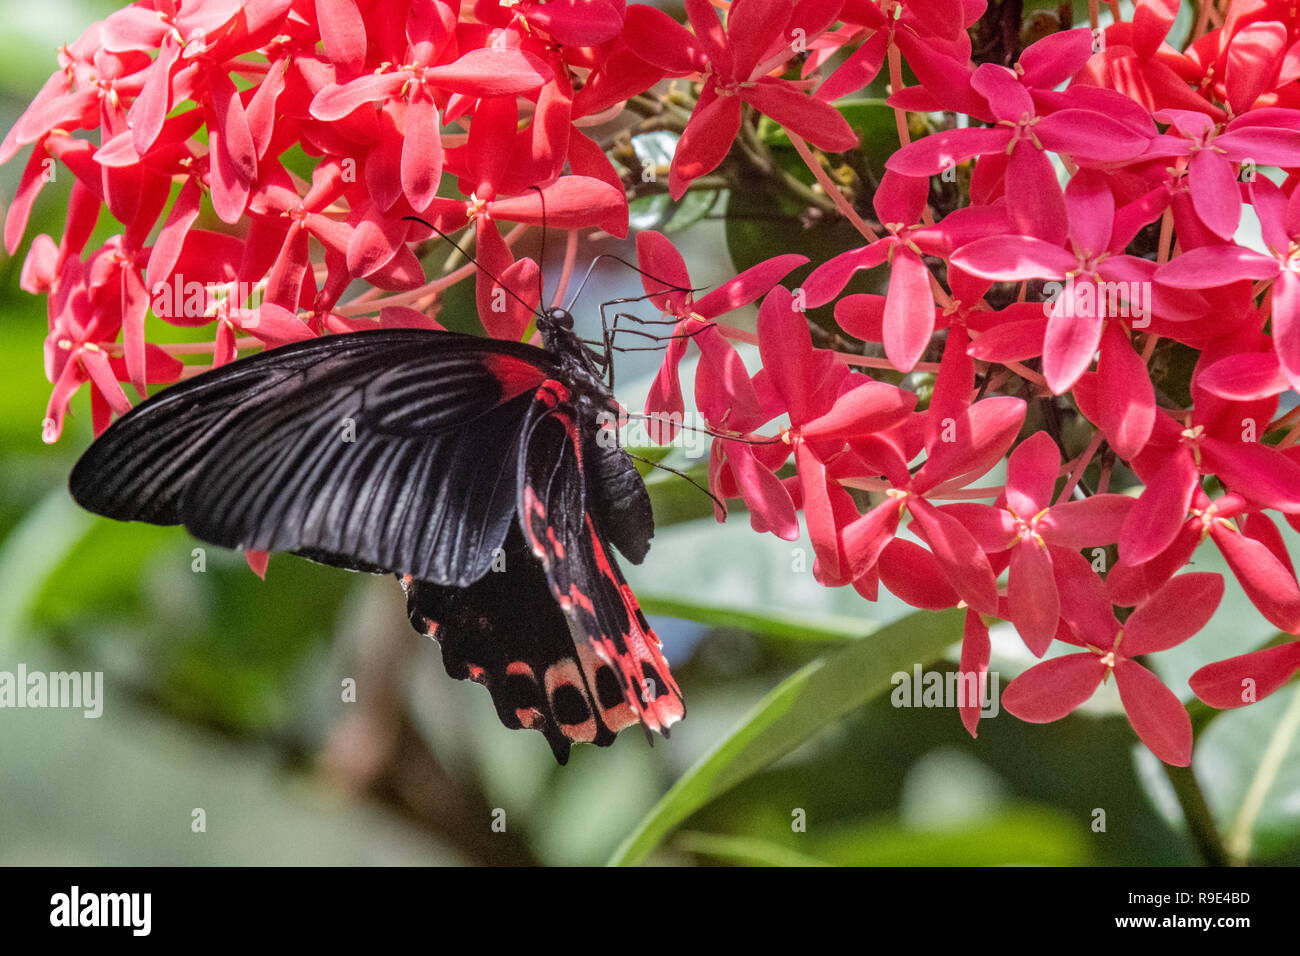 Scarlet swallowtail - Scarlet Mormon butterfly - Papilio rumanzovia in a butterfly garden - native Australian butterfly Stock Photo